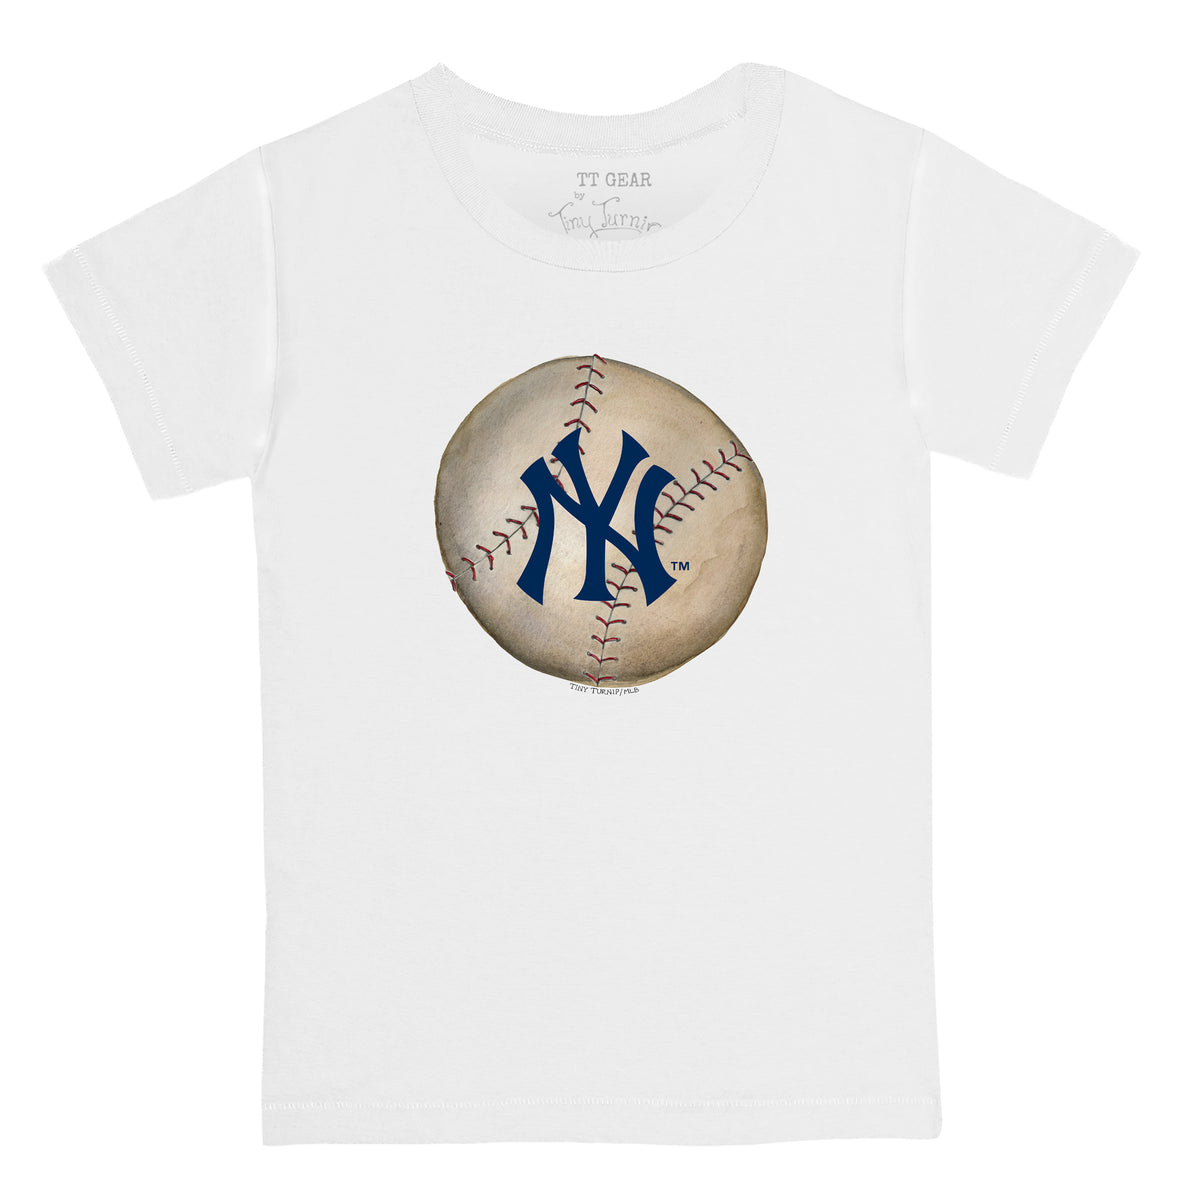 Tiny Turnip New York Yankees Spring Training 2023 Tee Shirt Youth Medium (8-10) / Navy Blue